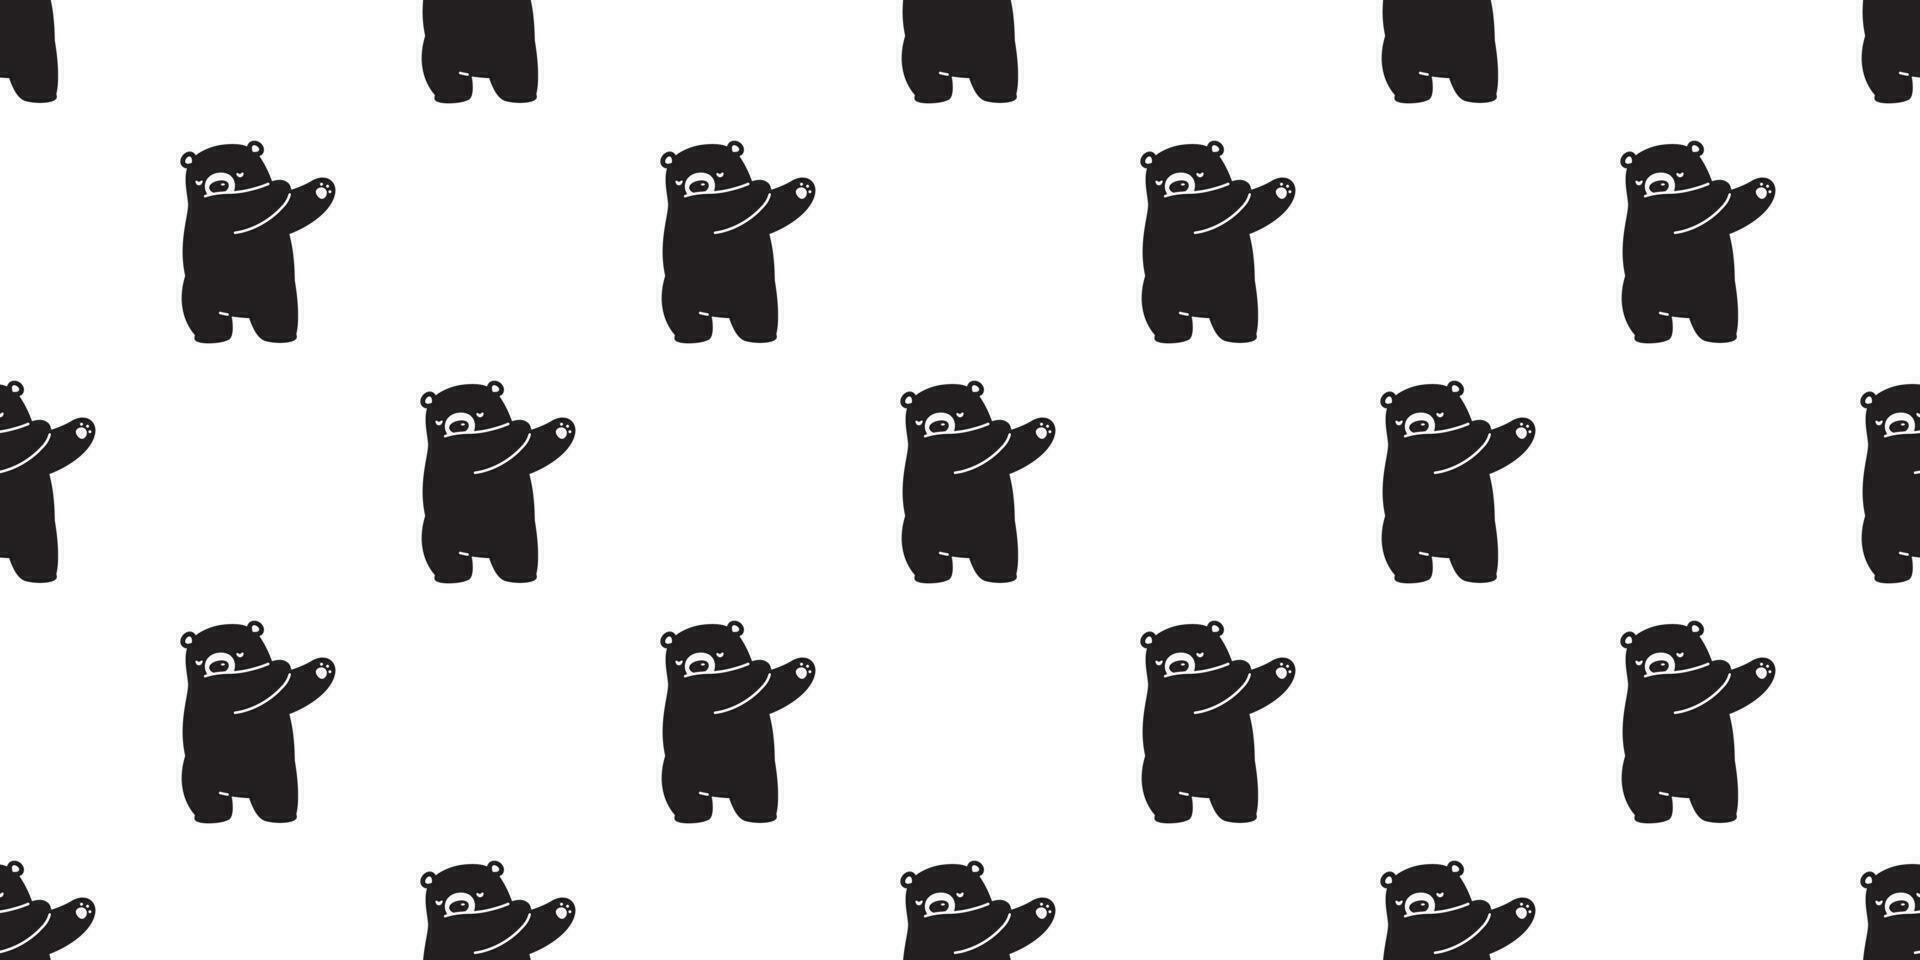 Bear seamless pattern vector polar bear dab dancing cartoon scarf isolated repeat wallpaper tile background illustration